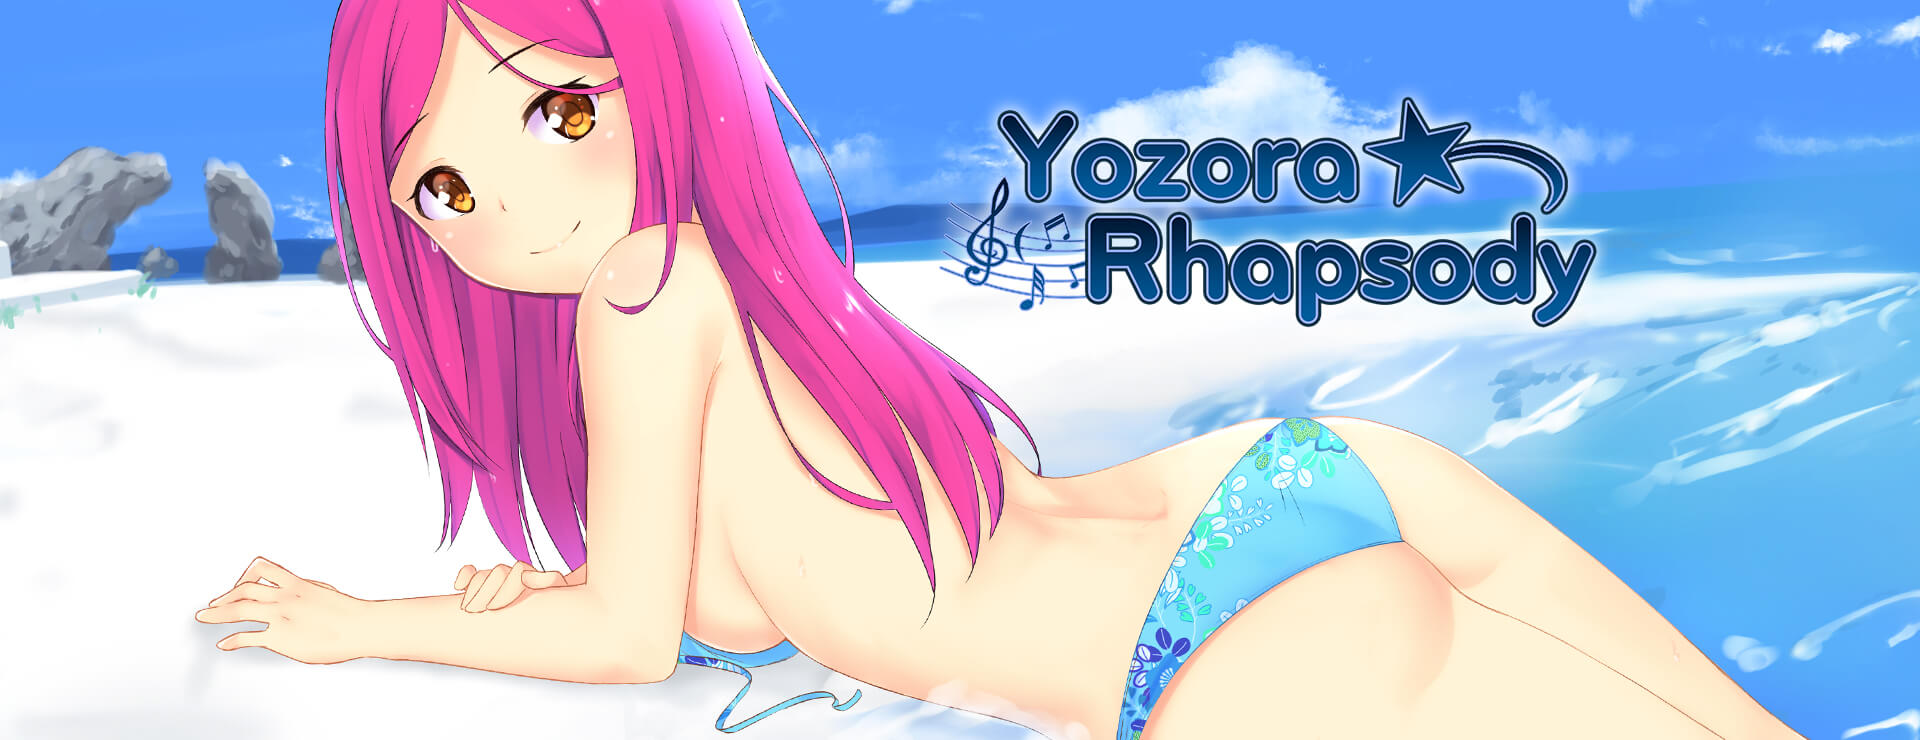 Yozora Rhapsody - ビジュアルノベル ゲーム